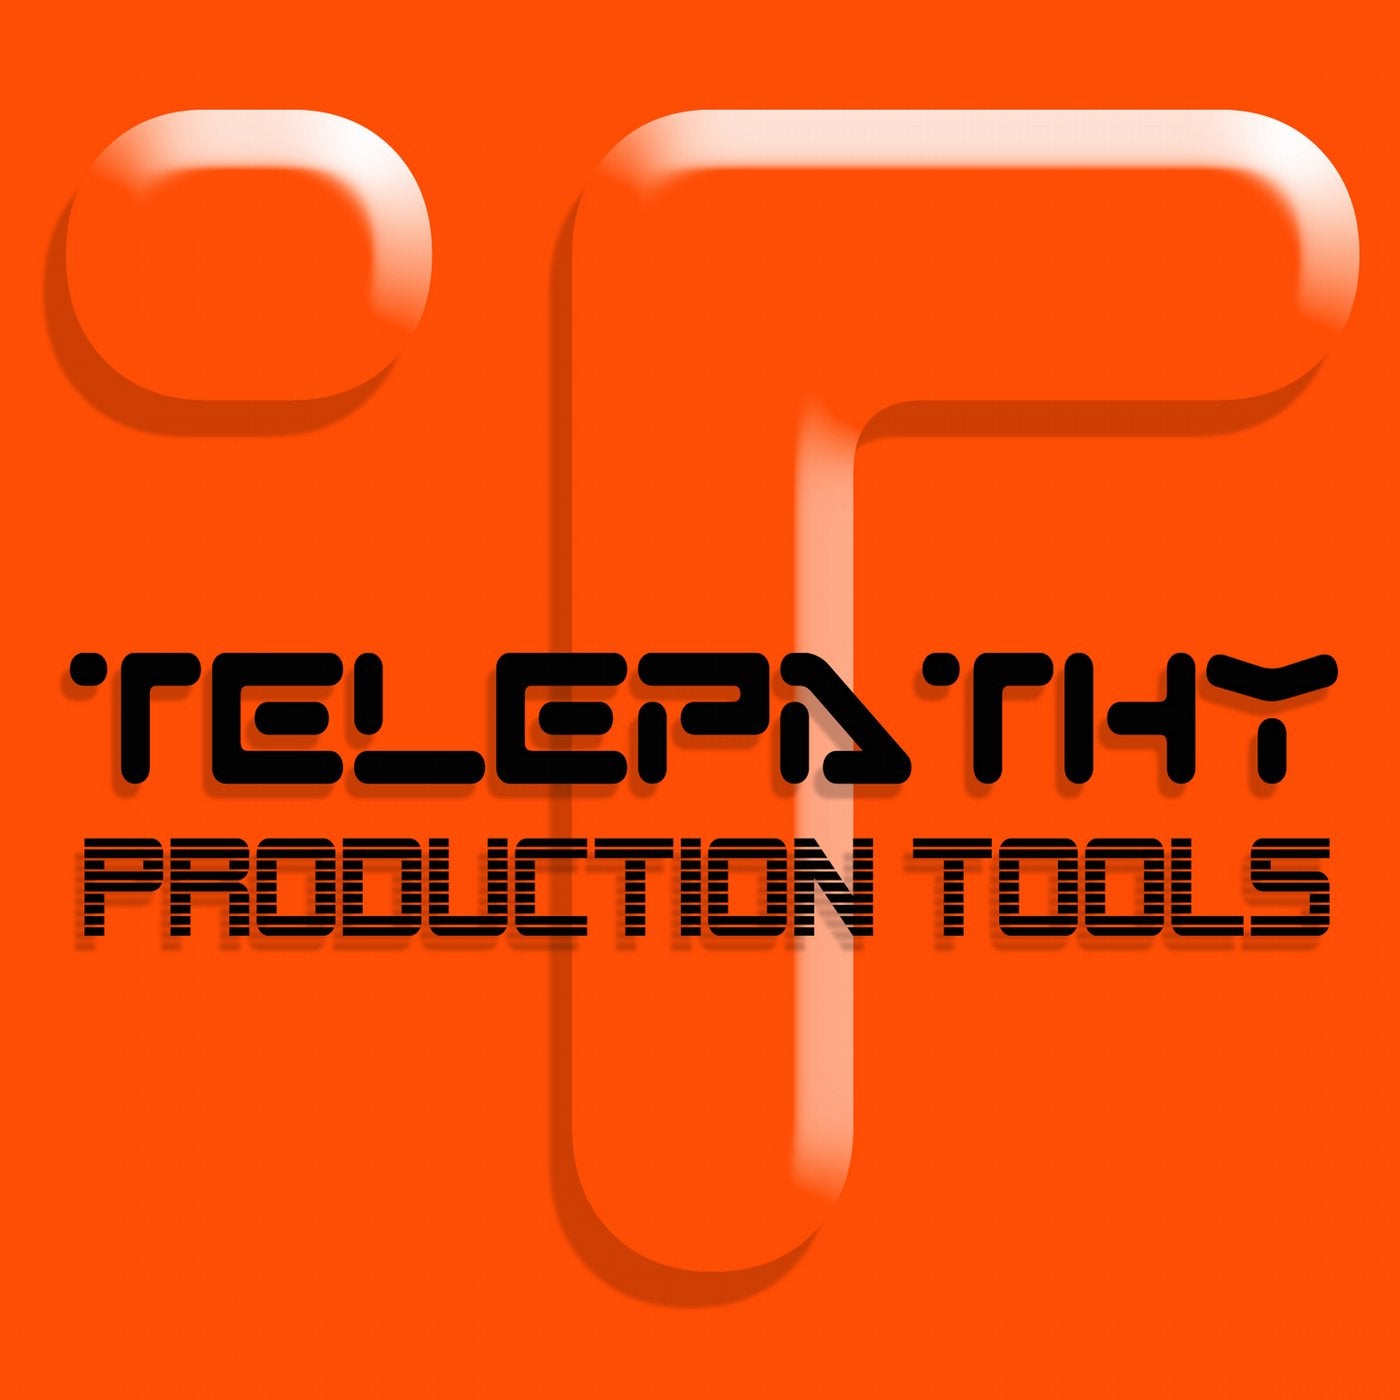 Telepathy Production Tools Volume 12